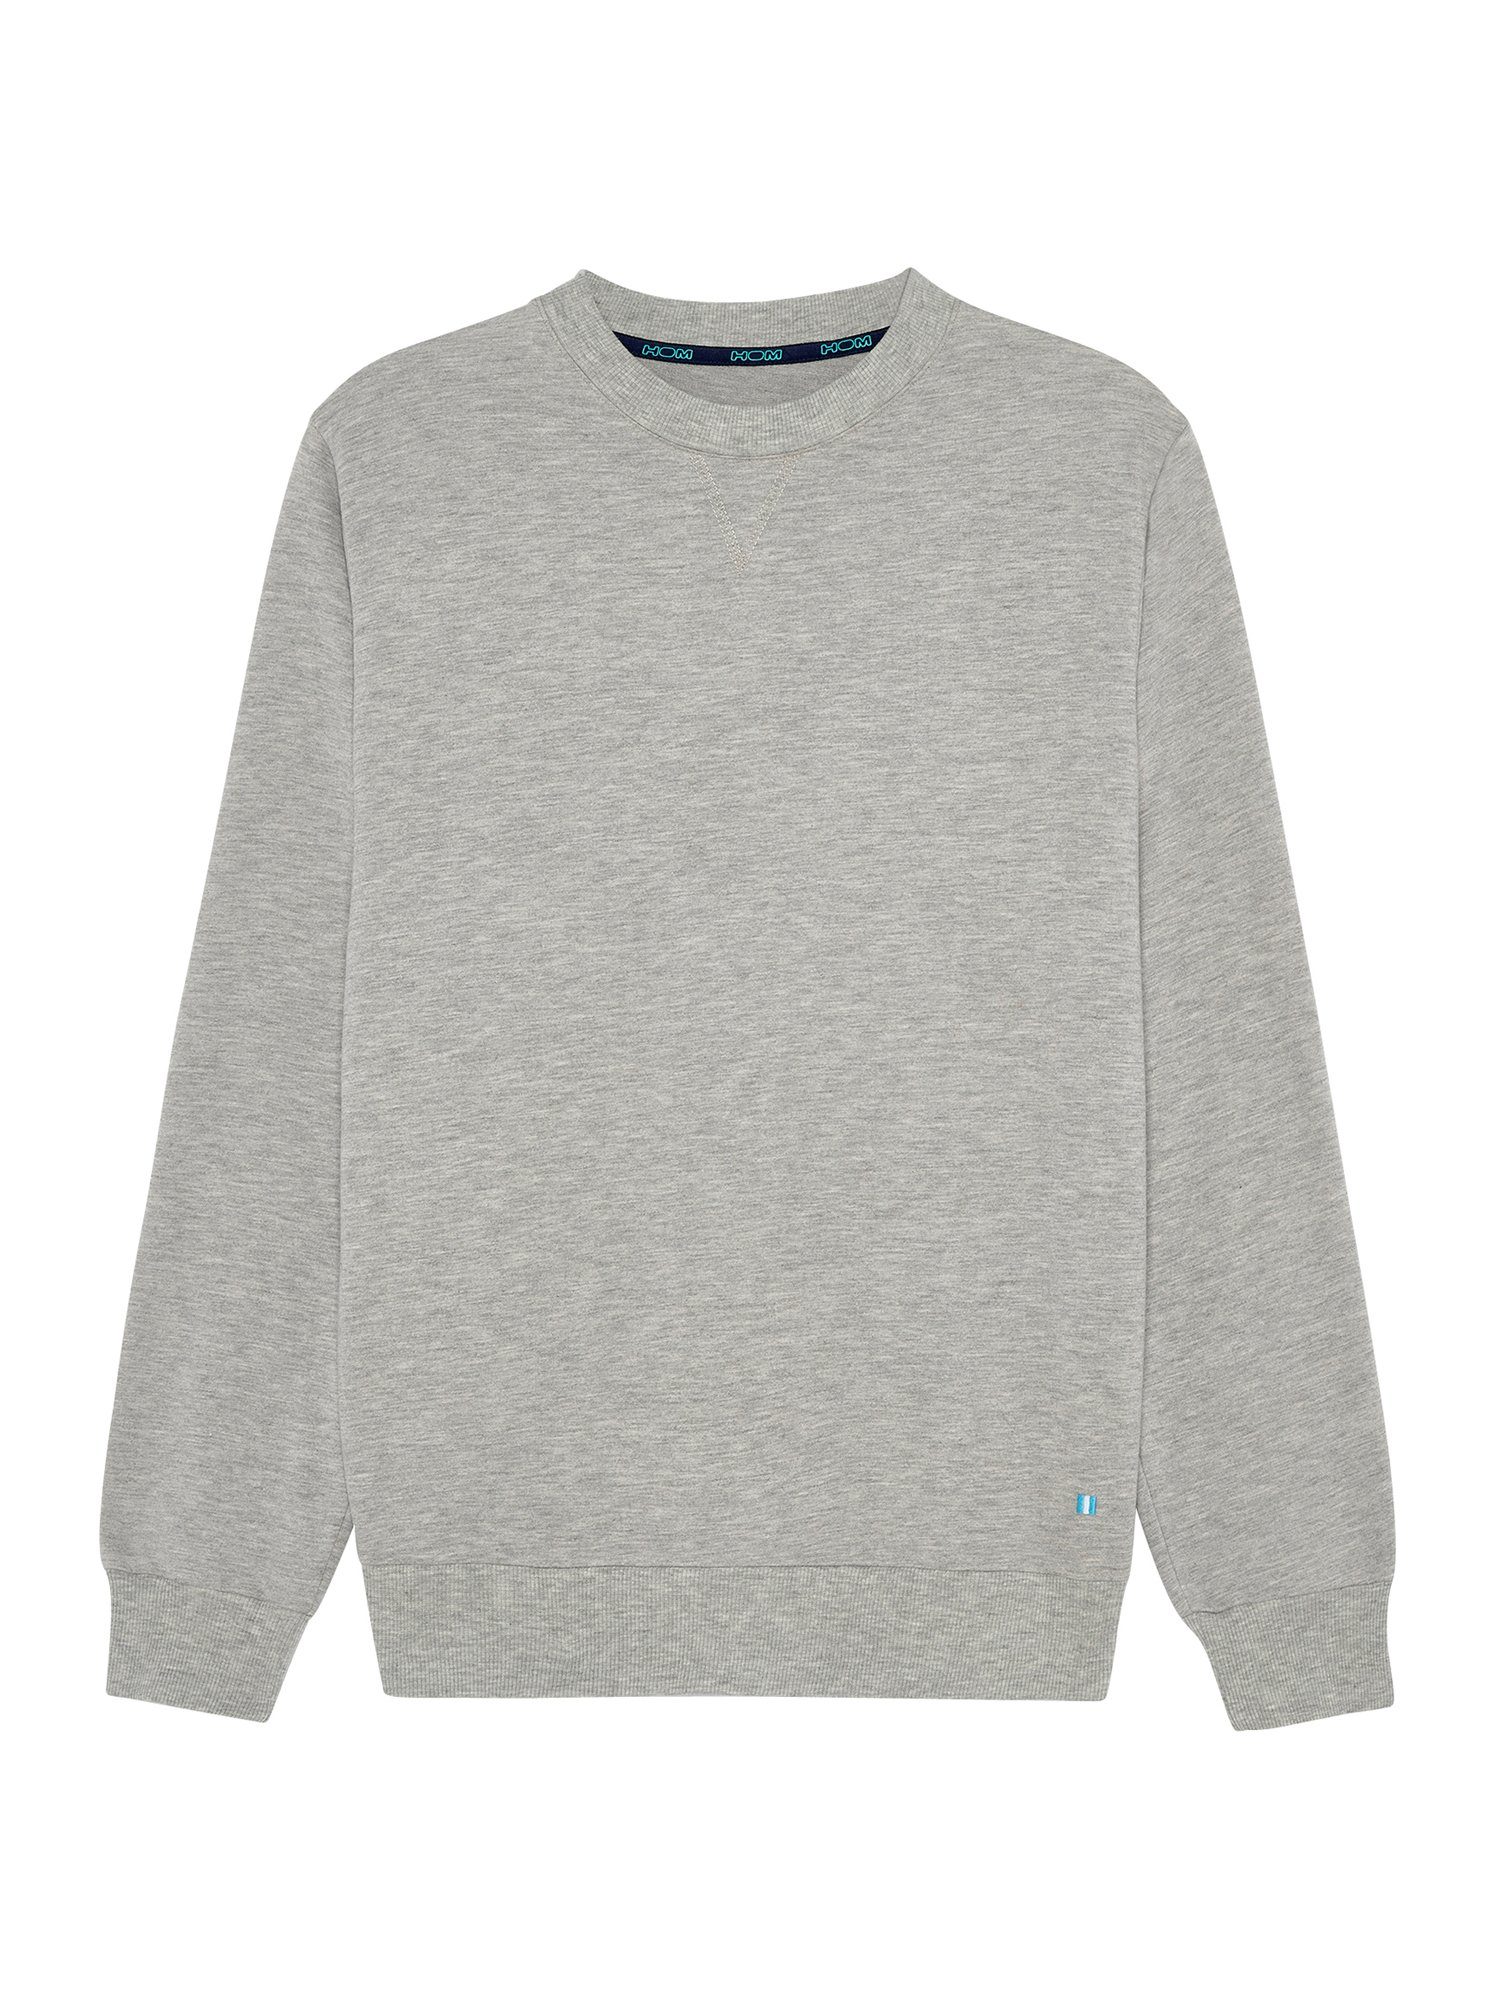 Hom Sweatshirt Sport Lounge grey